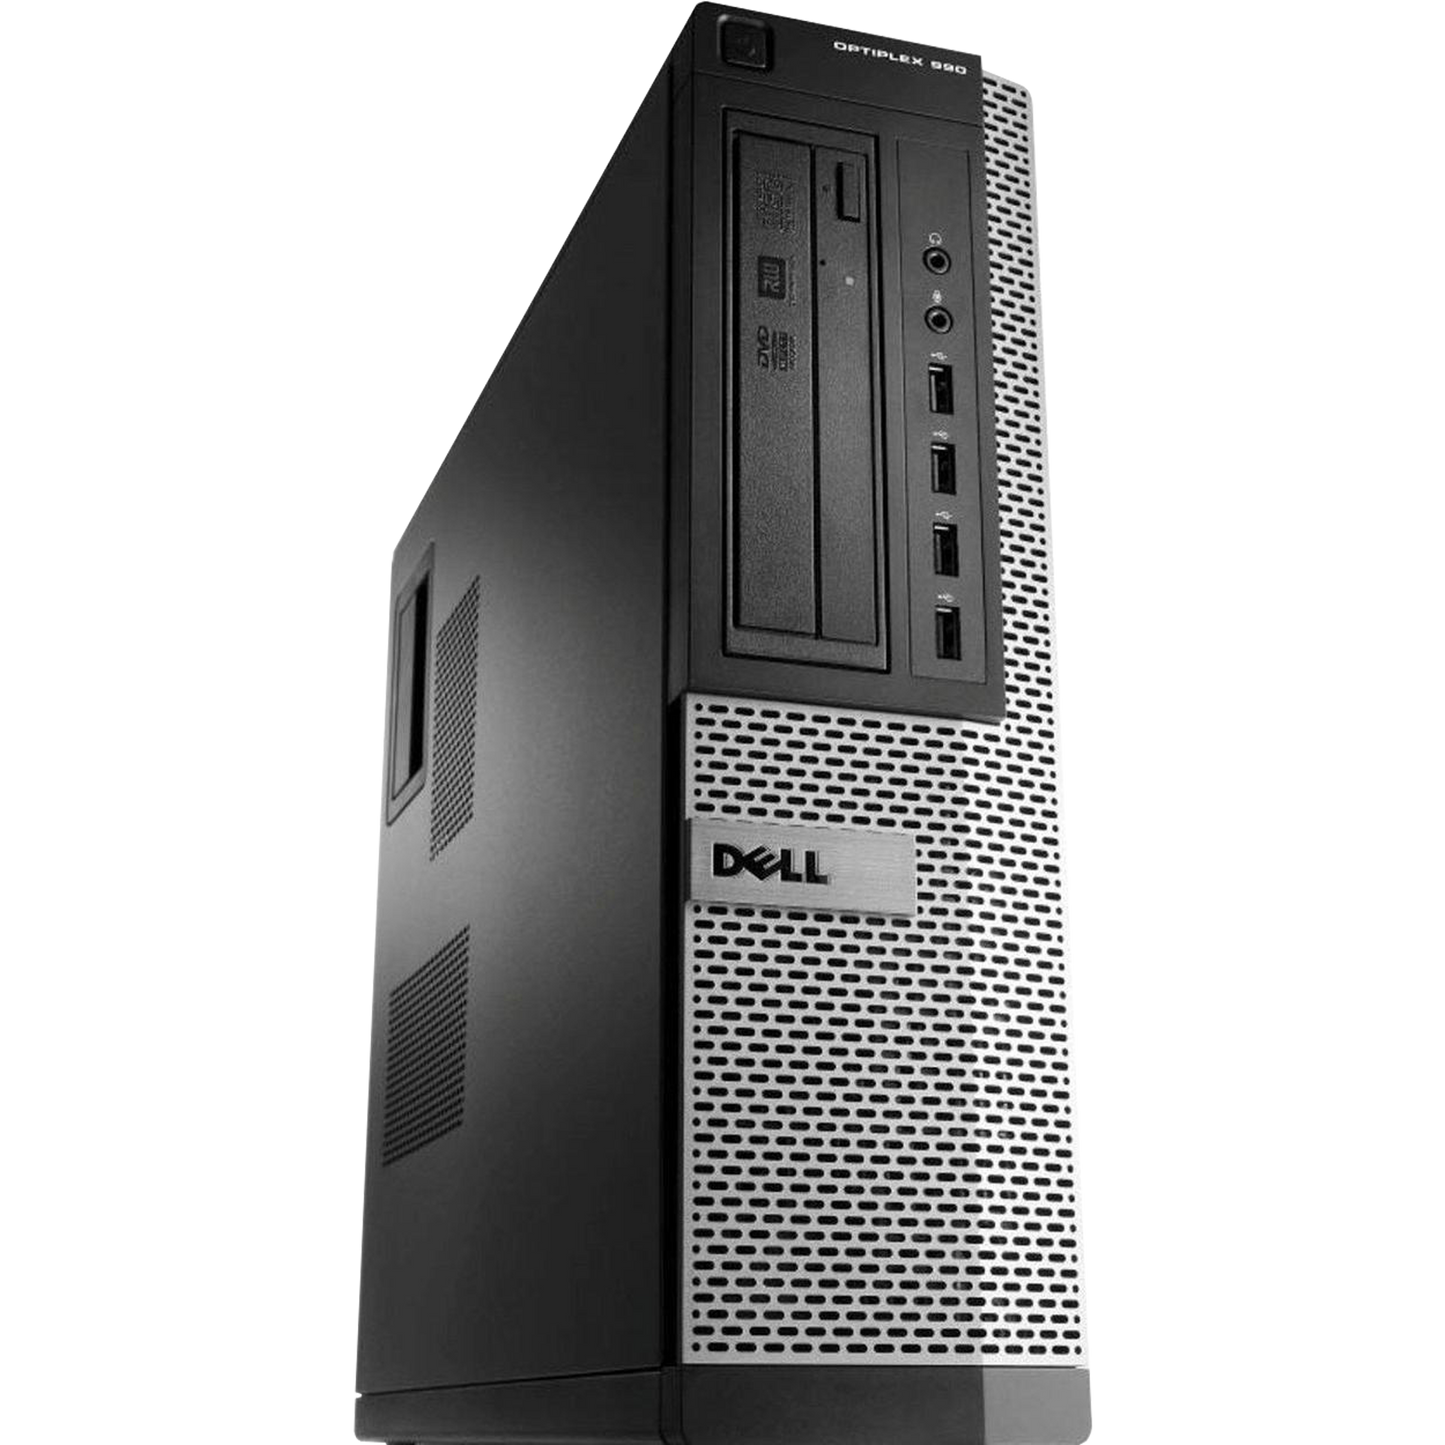 Dell OptiPlex GX990 Intel i5, 2nd Gen Desktop PC with 8GB Ram Desktop Computers